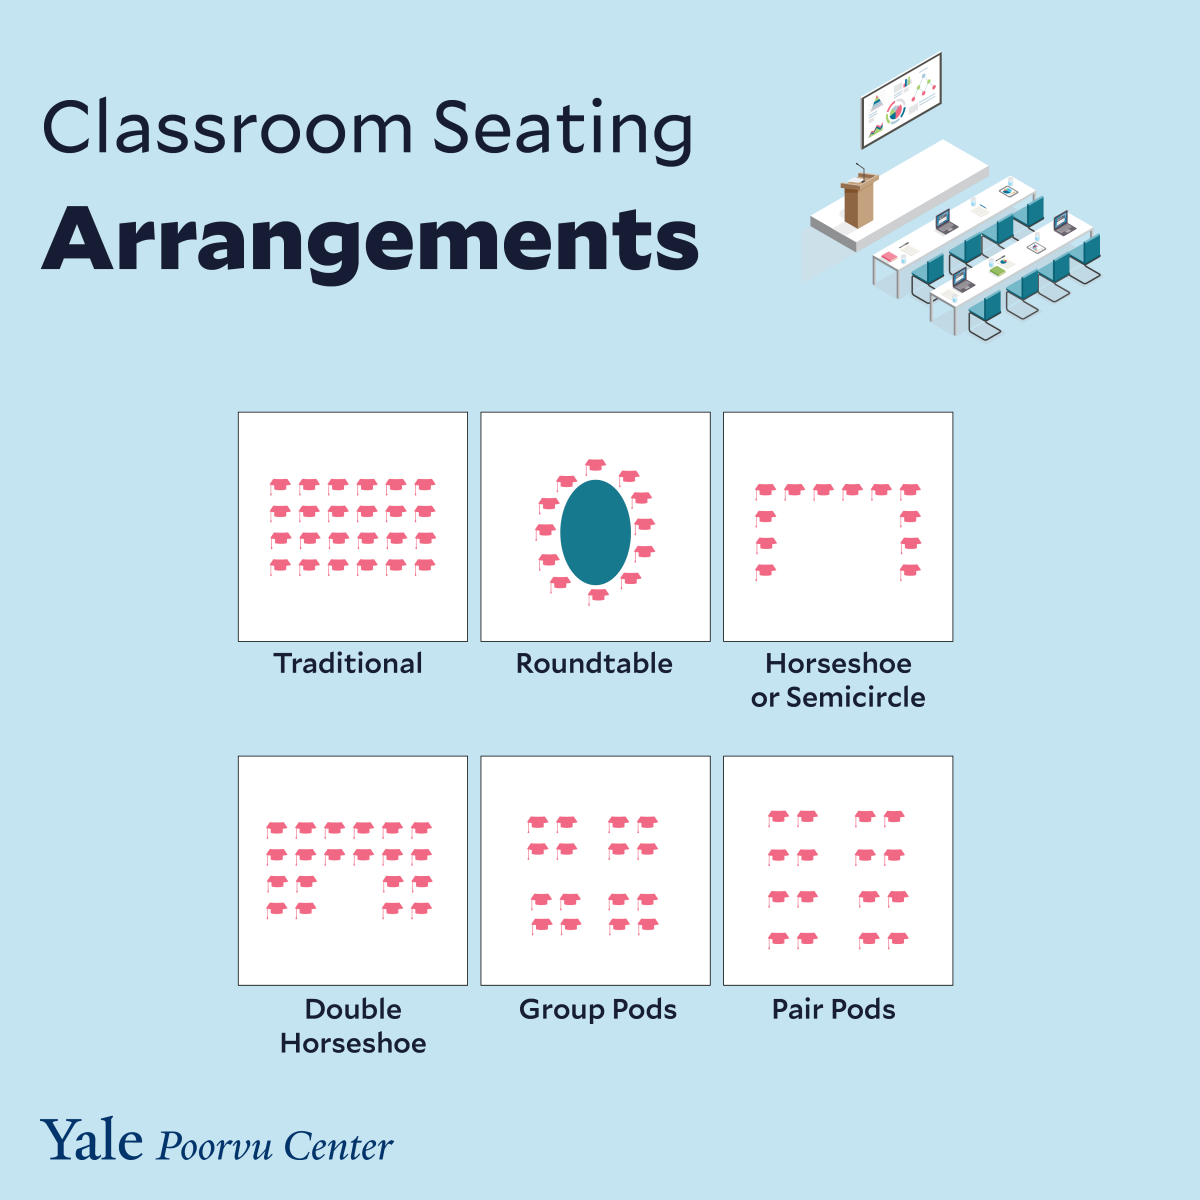 Classroom seating arrangement examples.